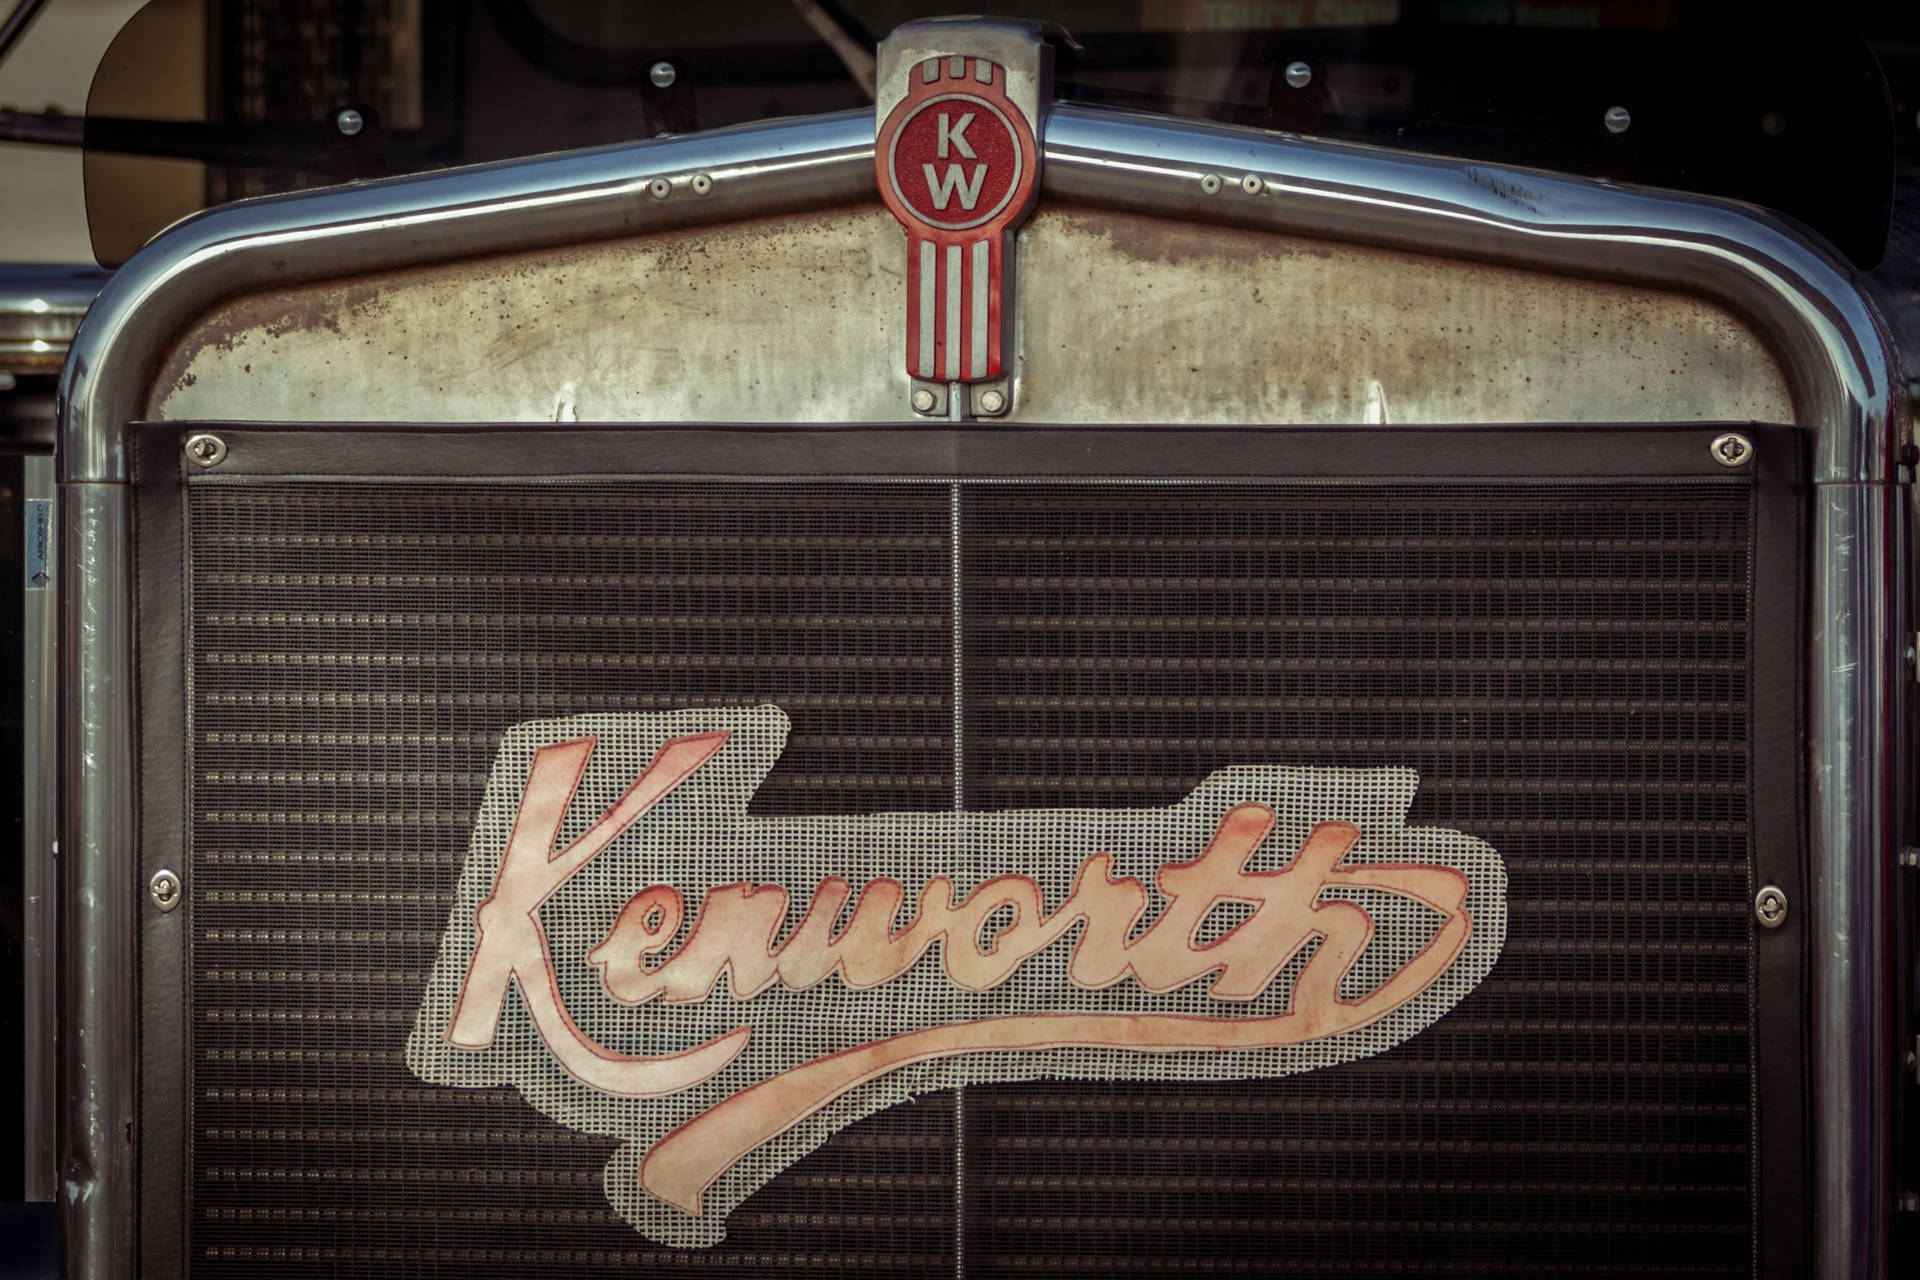 Wallpaper Trucks Kenworth automobile 1920x1080